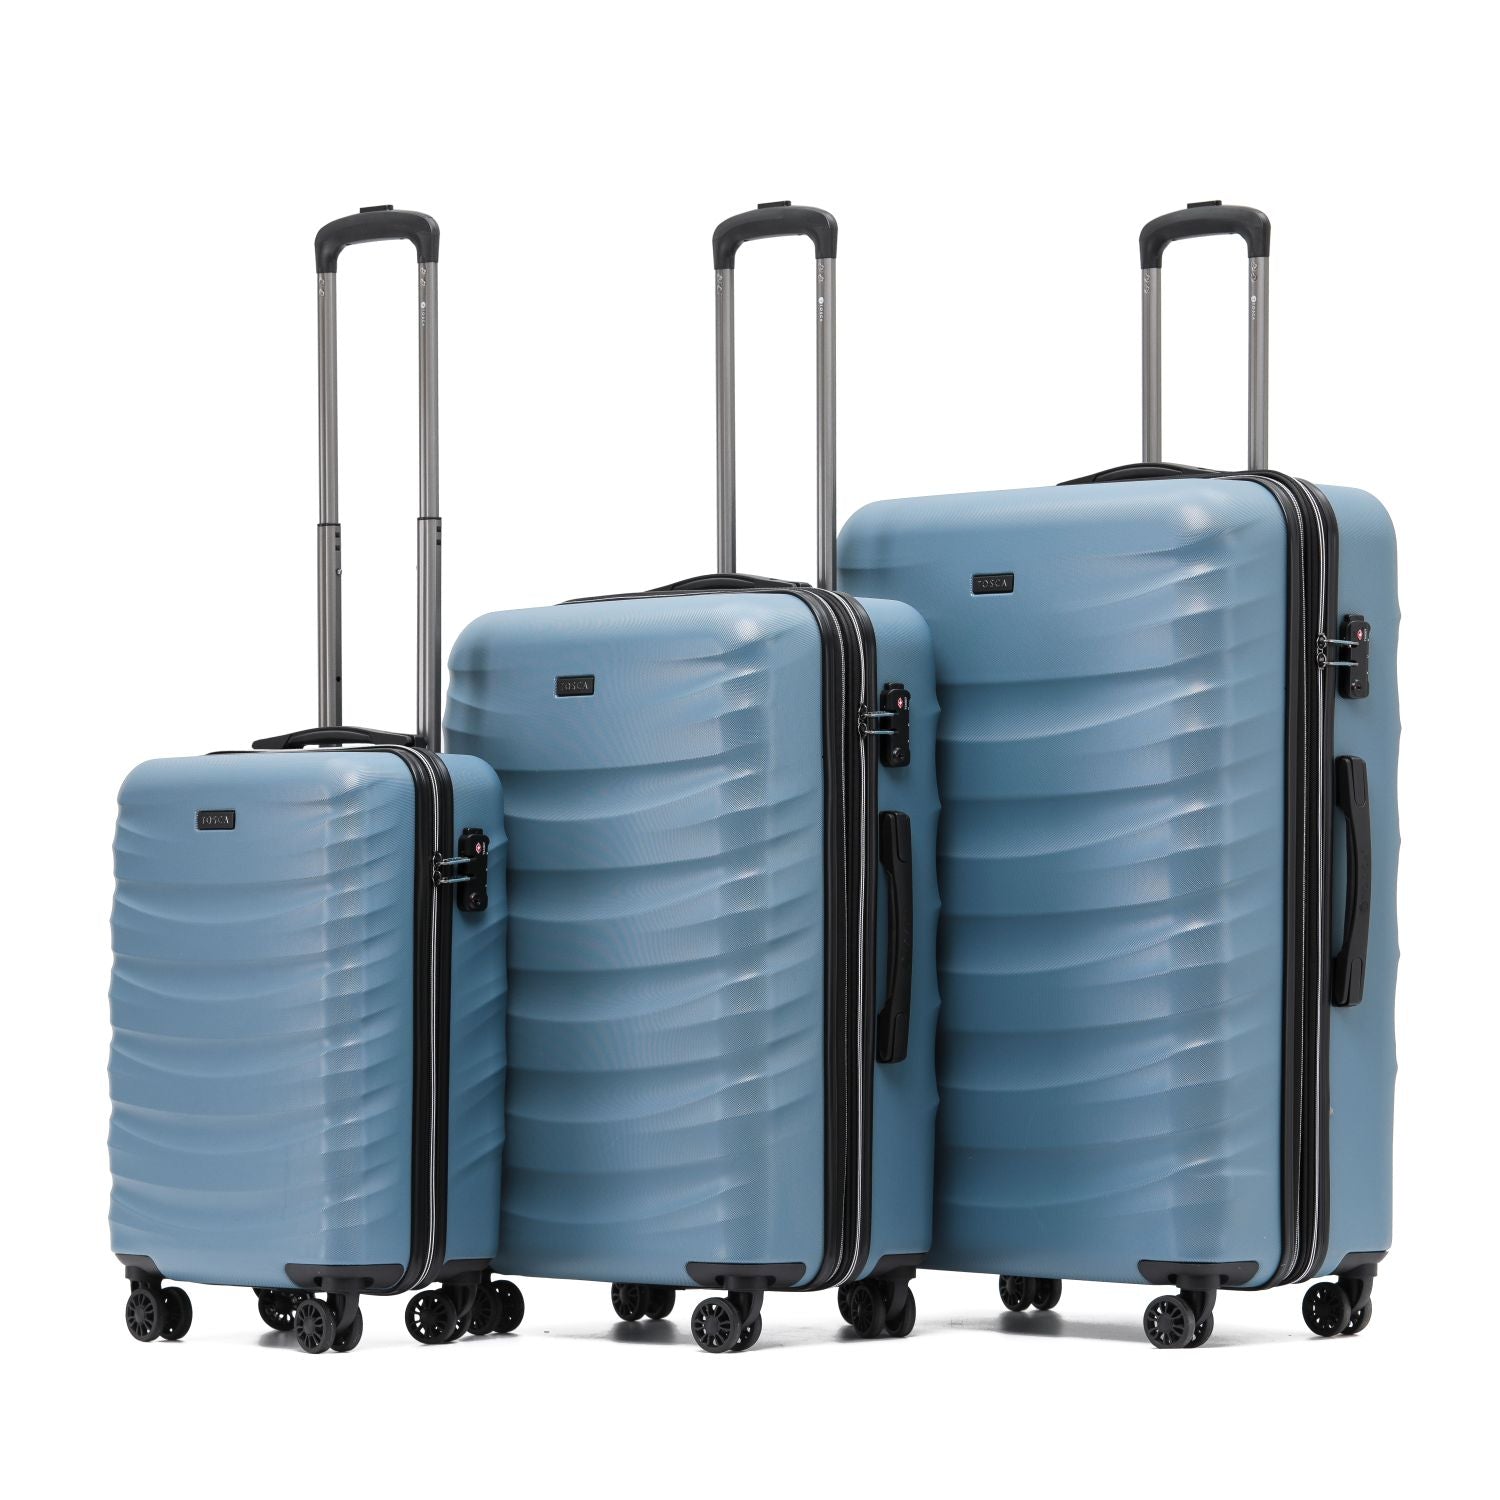 Tosca - Intersteller set of 3 suitcases - Blue-1